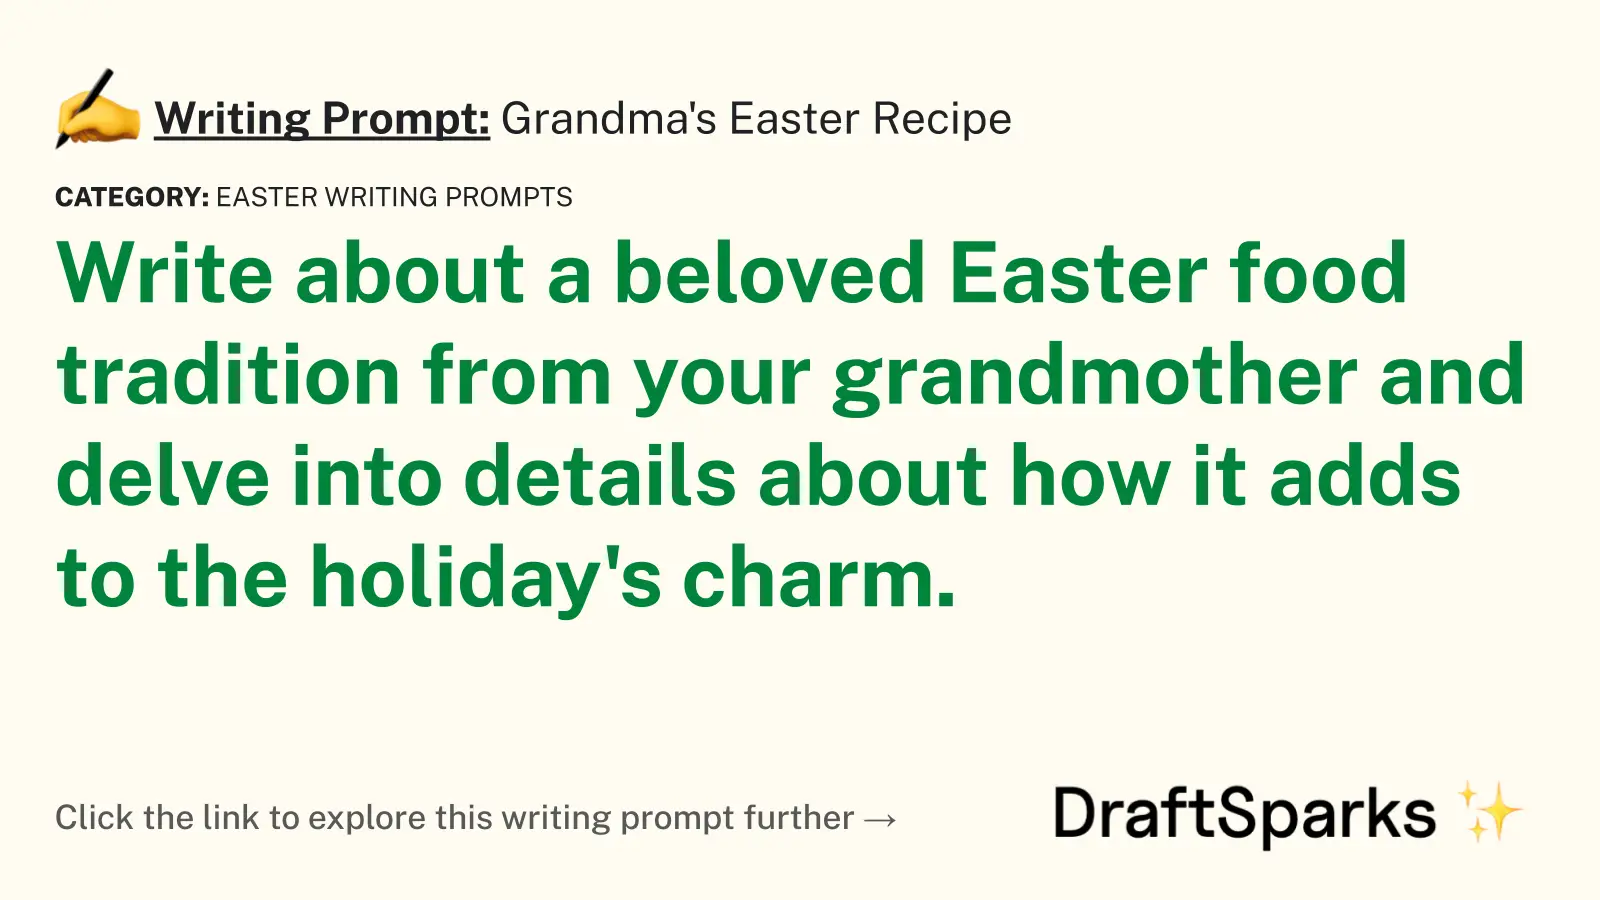 Grandma’s Easter Recipe